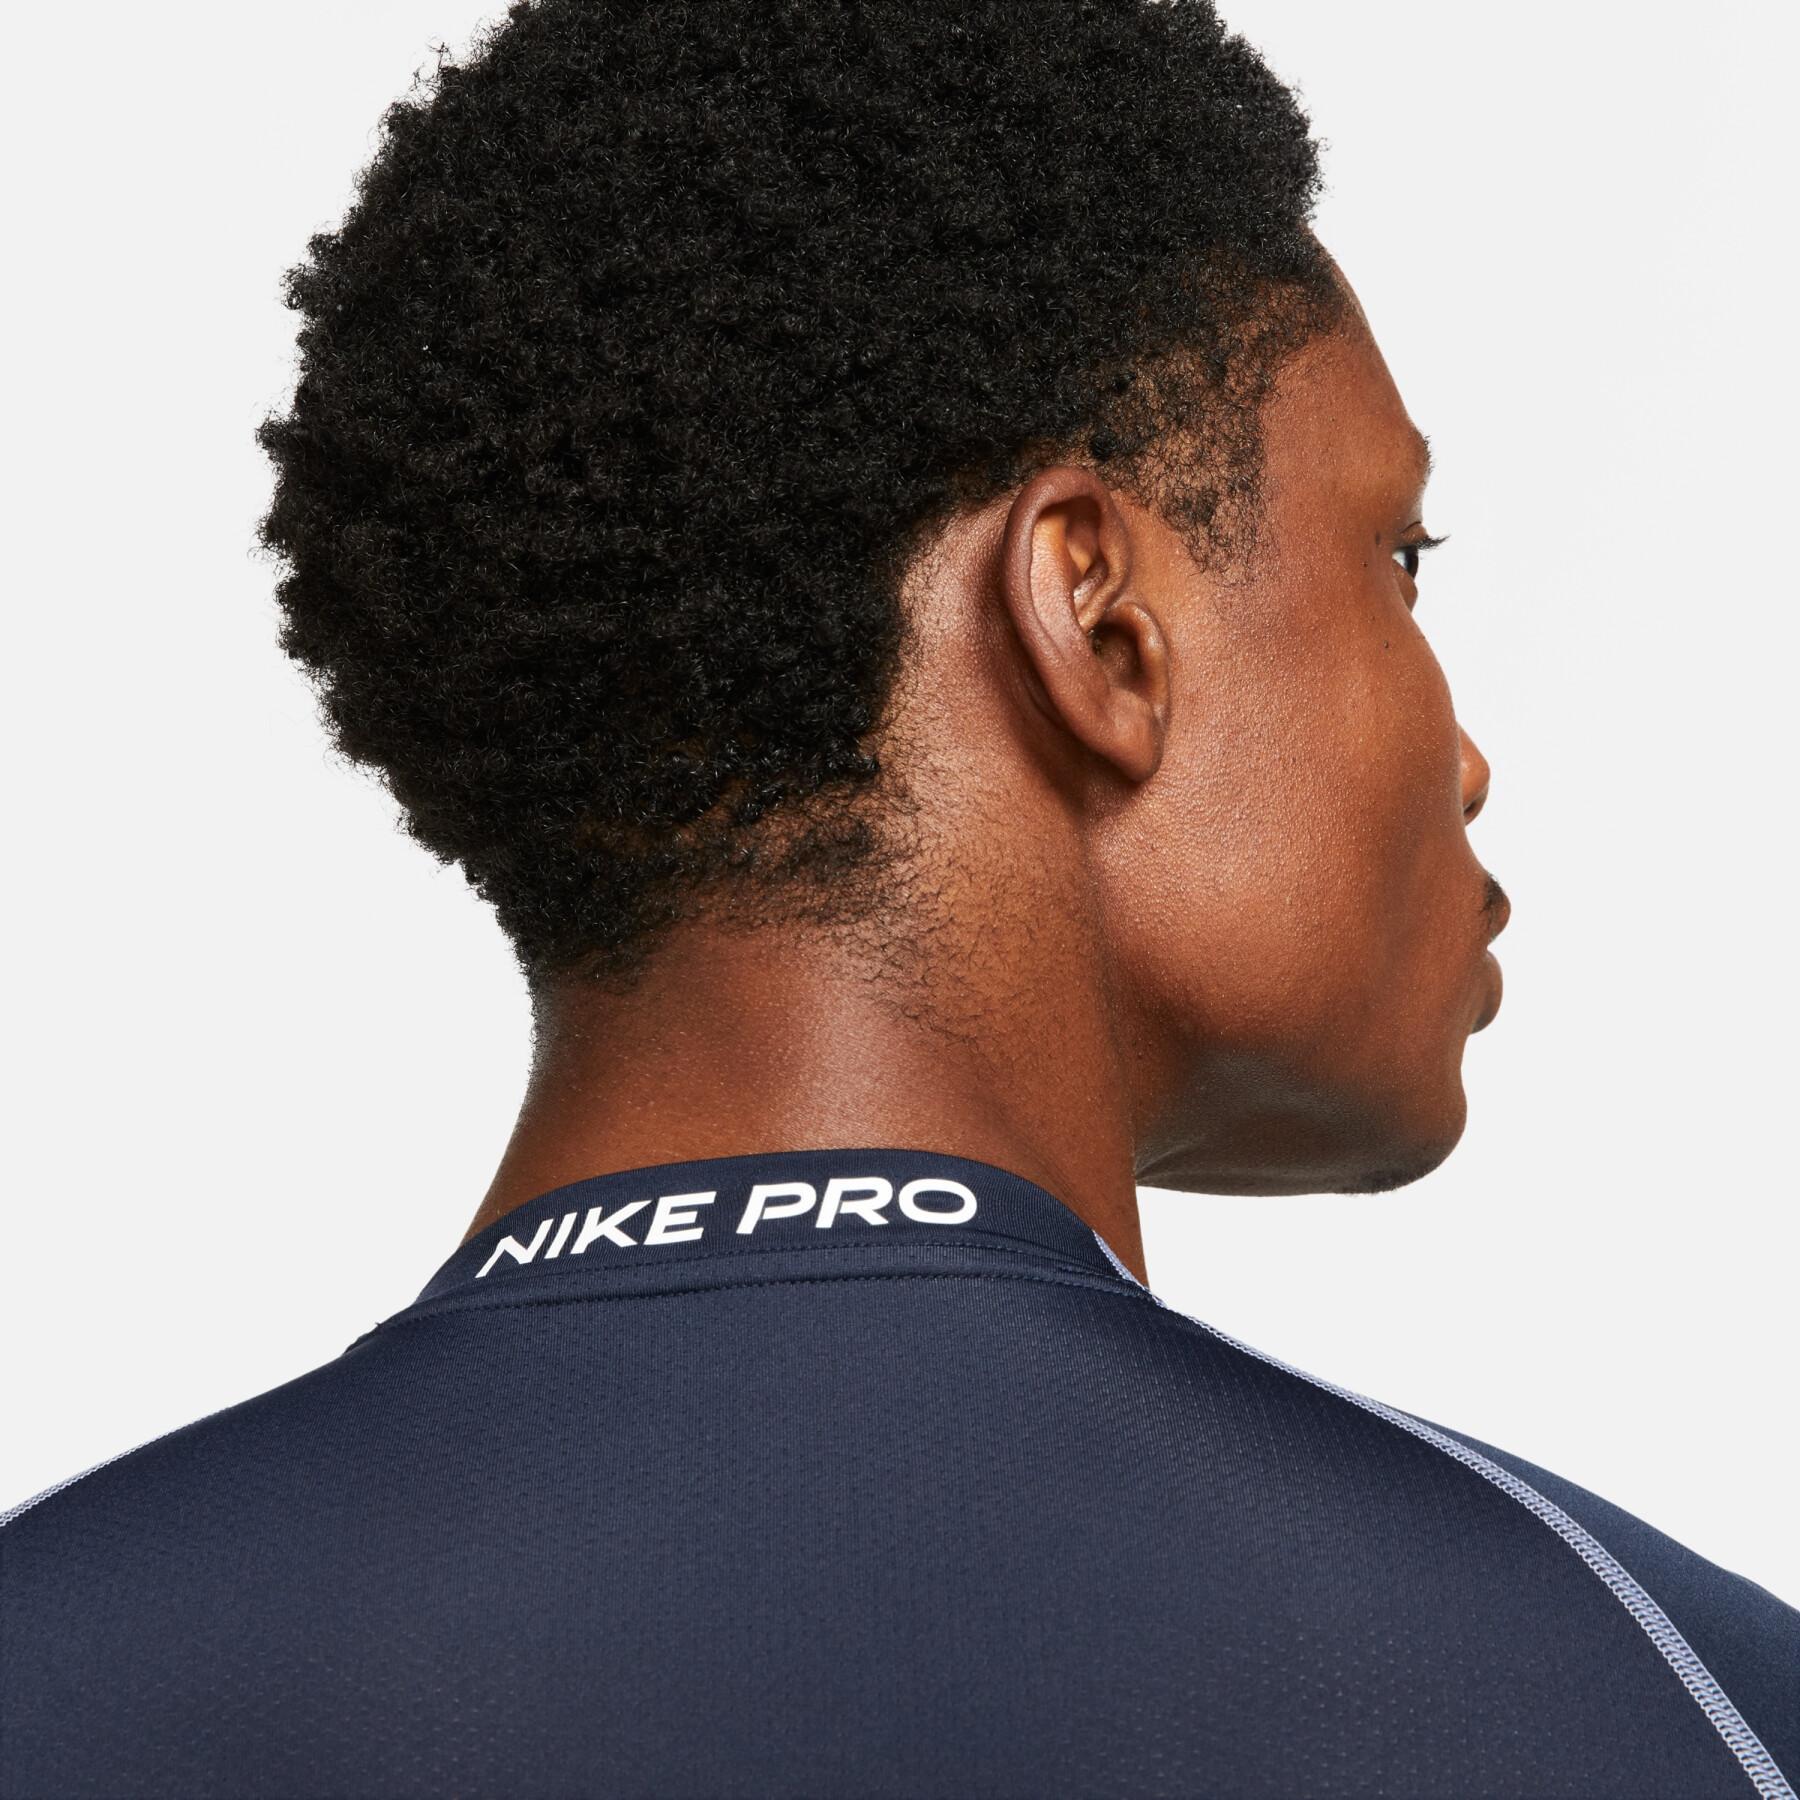 Camisola compressão manga comprida Nike NP Dri-Fit